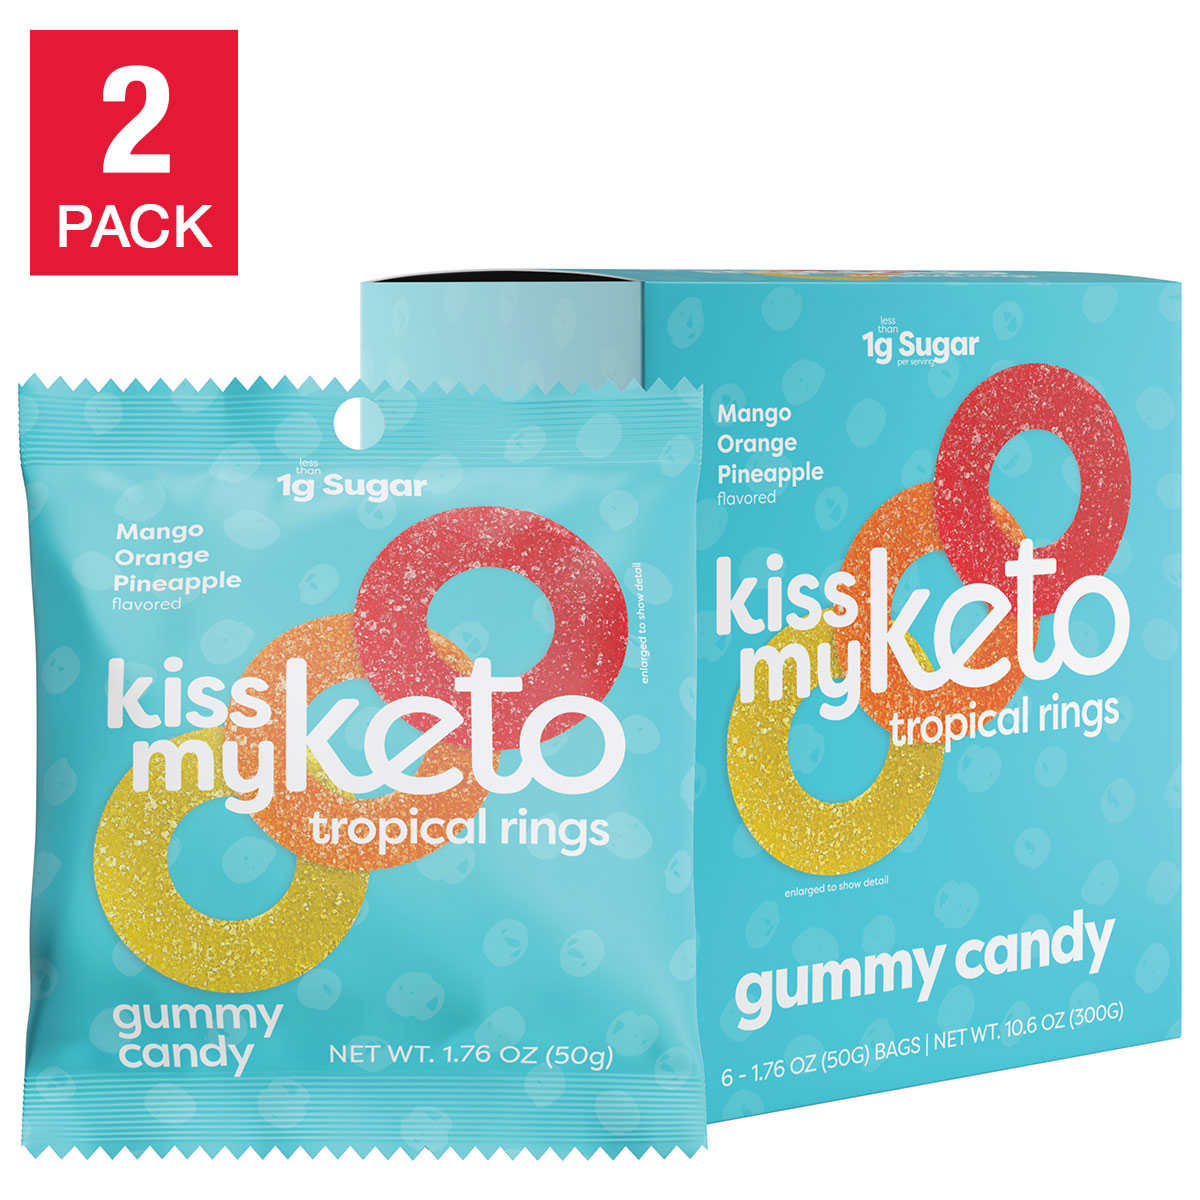 Kiss My Keto Fish Friends Gummy Candy, 50g — Everything Keto